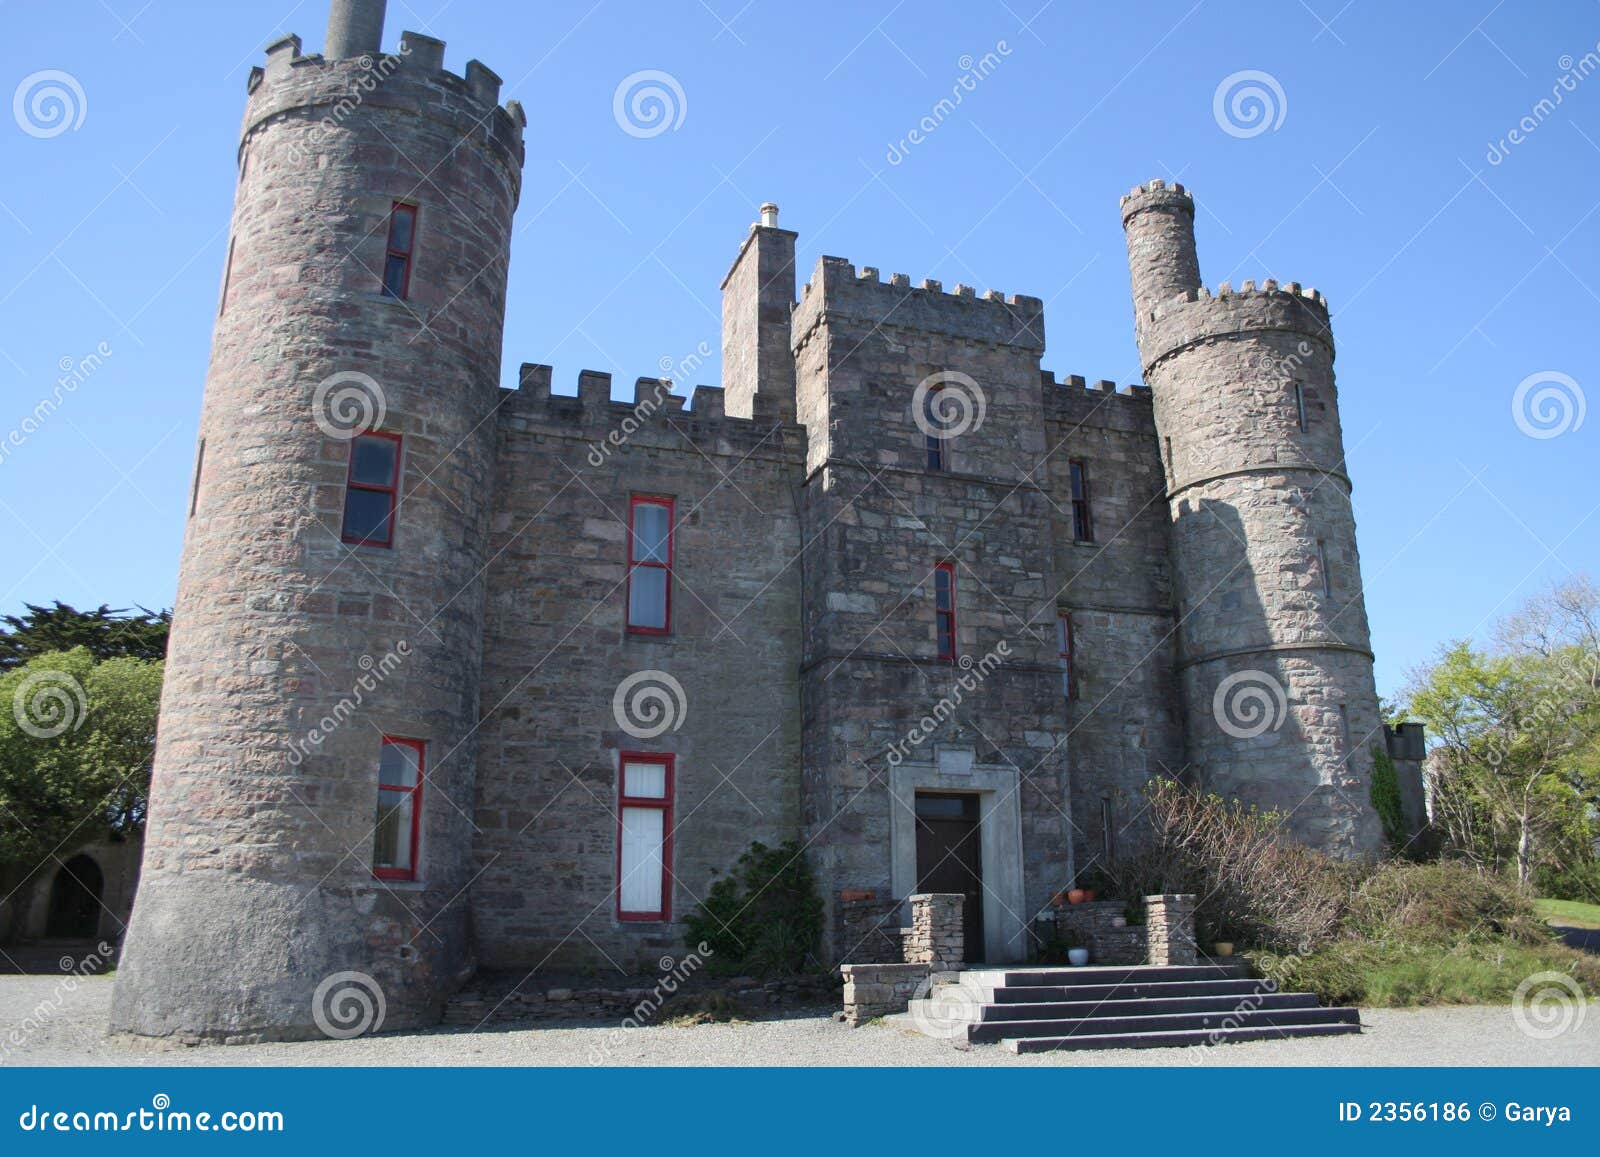 irish castle dwelling